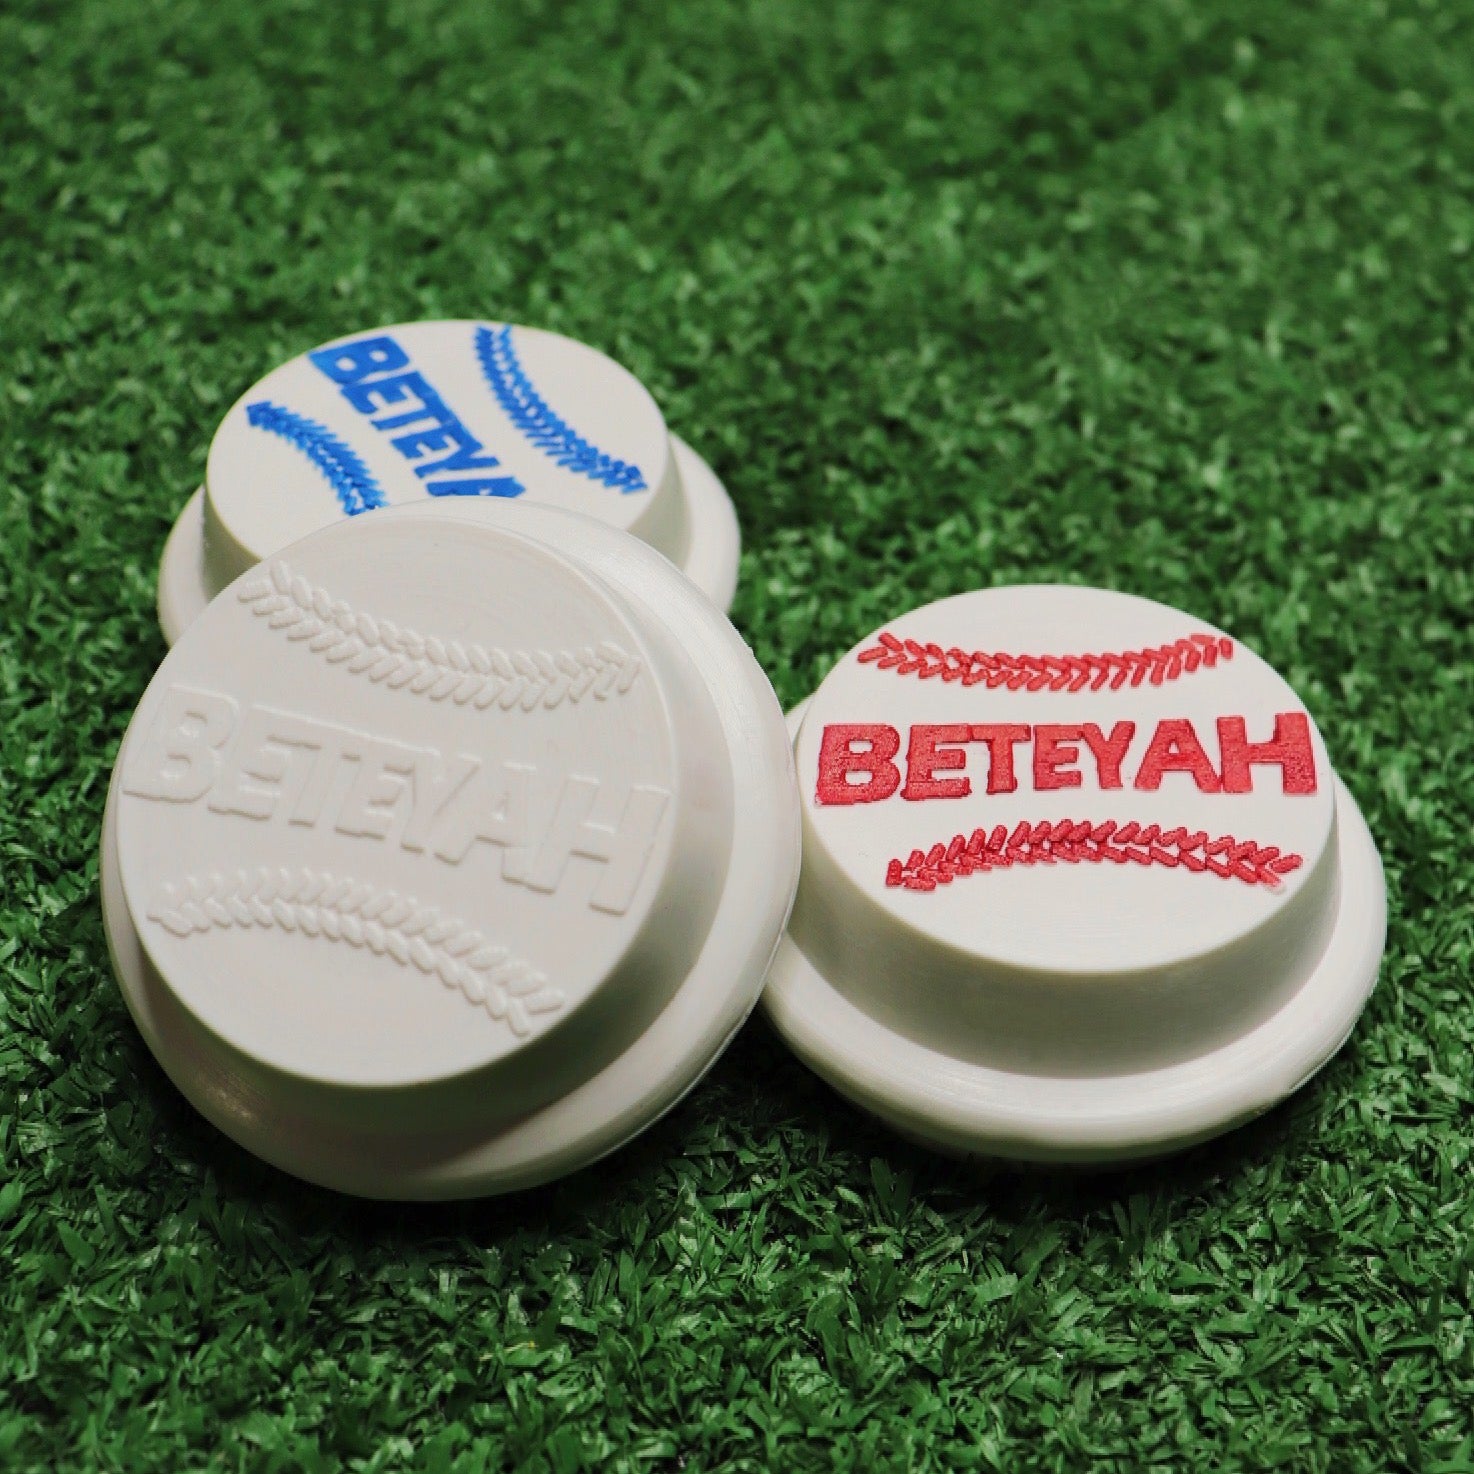 BETEYAH Starter Set 1 - 1 Bat + 1 Pack (12 Caps)